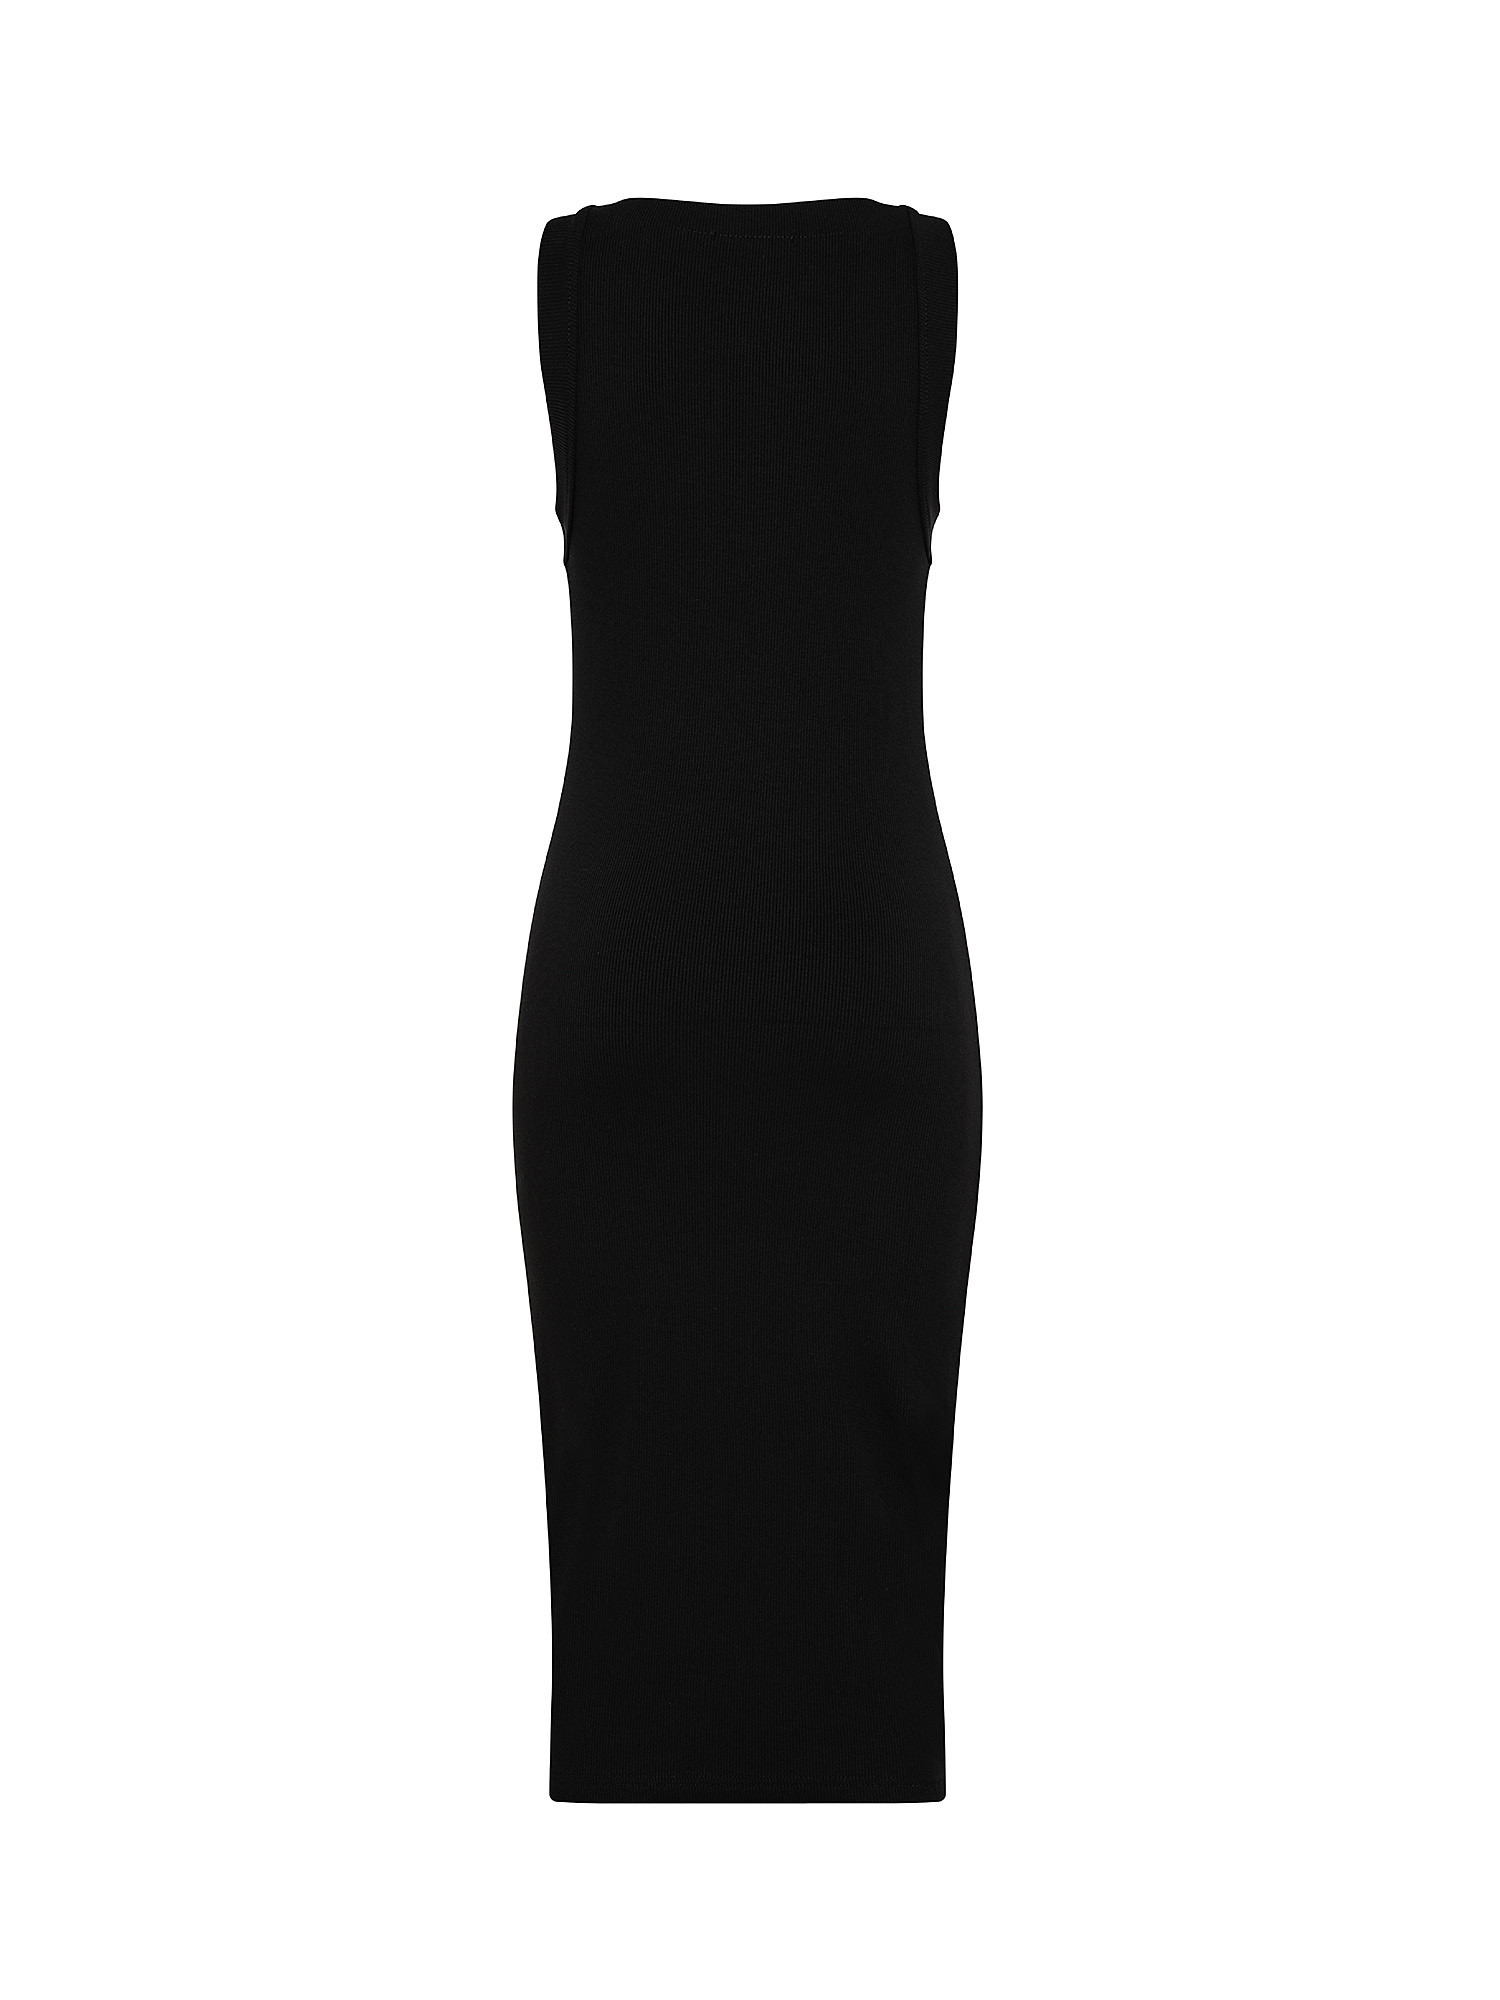 Bodycon rib dress, Black, large image number 1